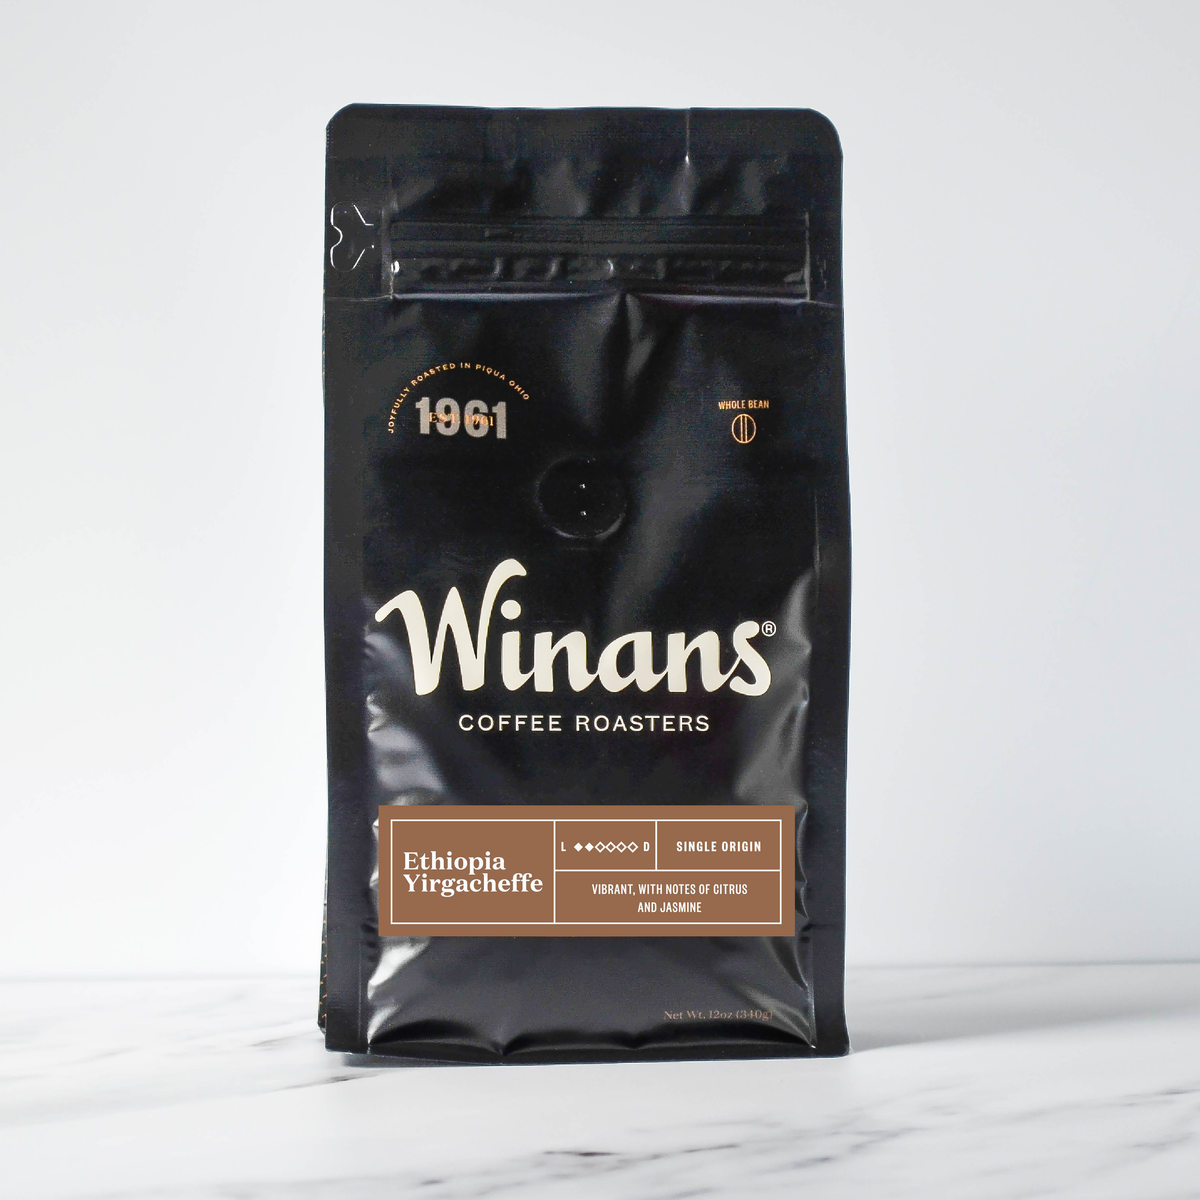 Winans Winans Ethiopia Yirgacheffe single origin coffee beans, 12oz bag